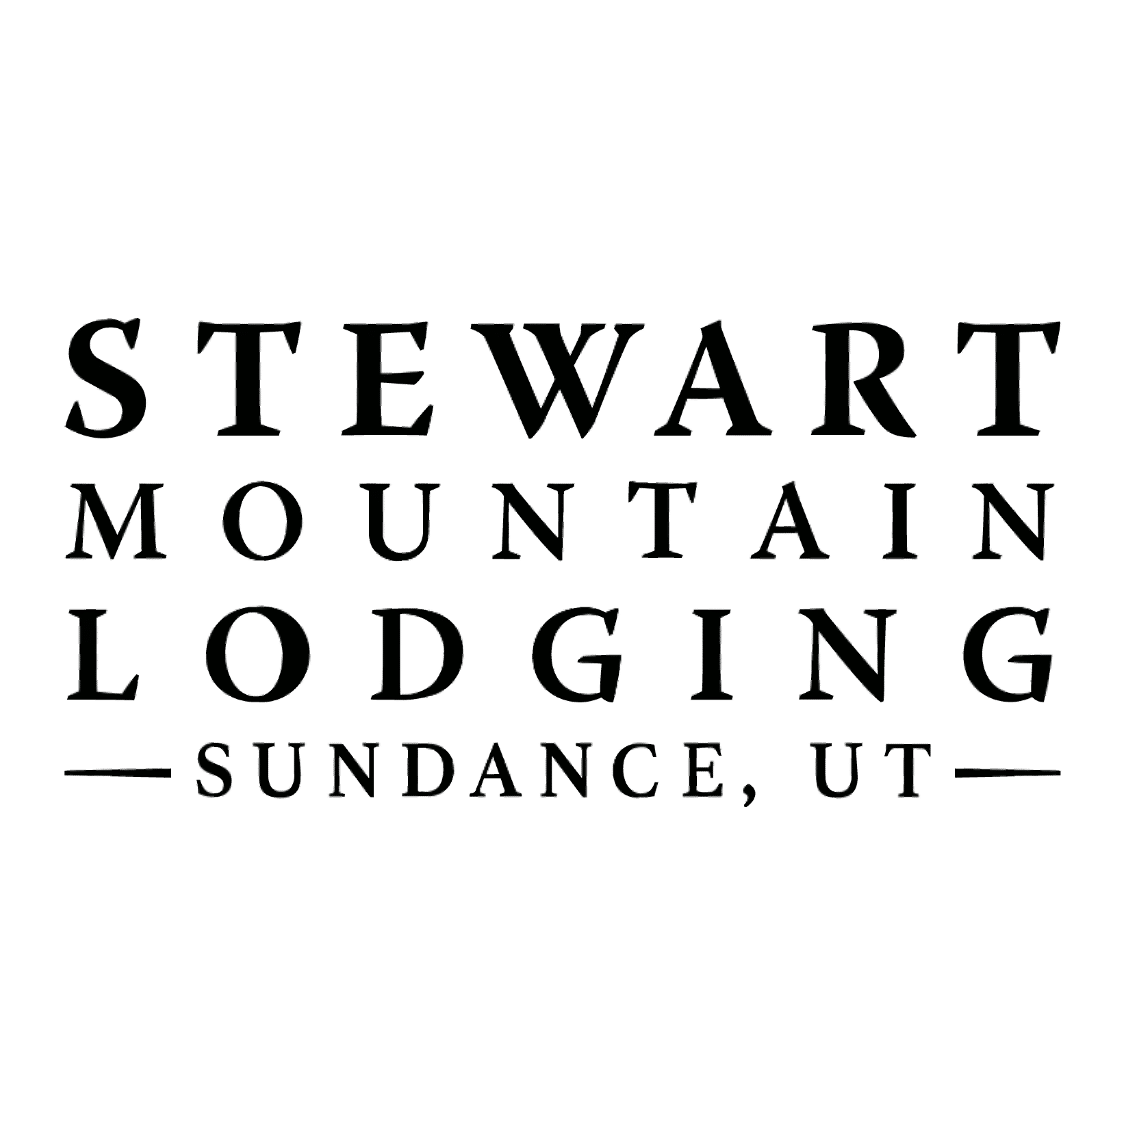 Stewart Mountain Lodging